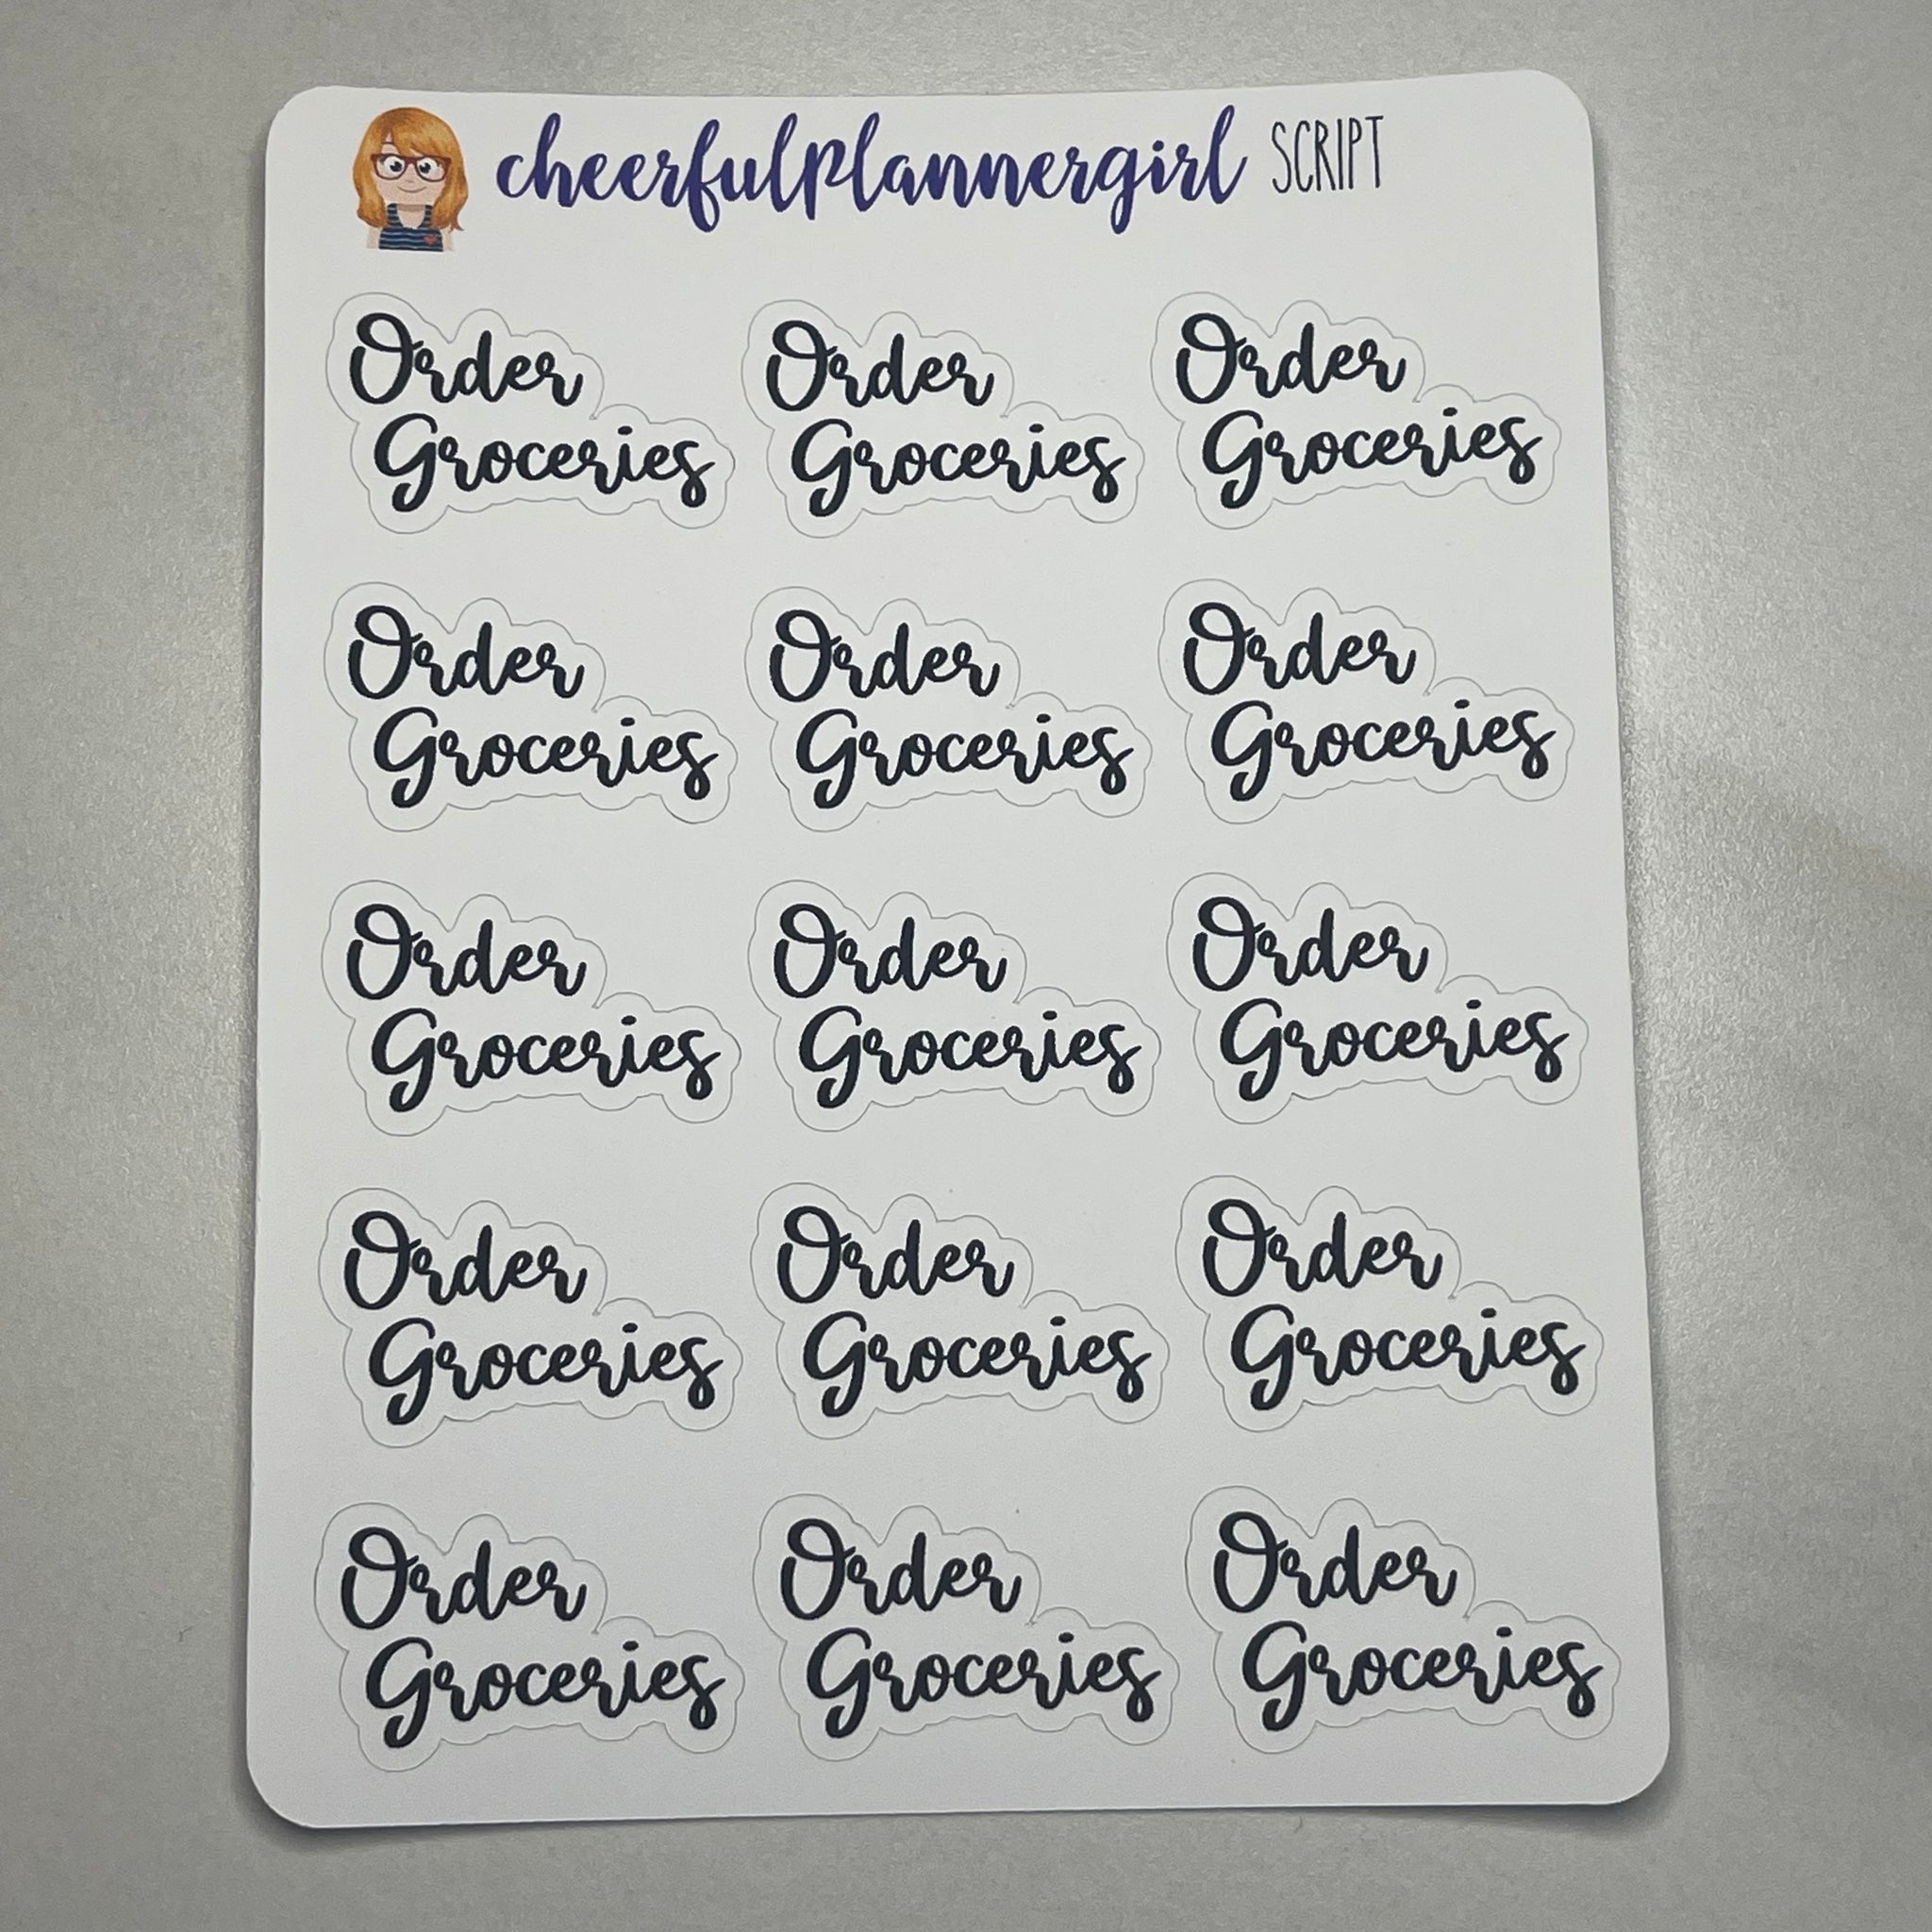 Order Groceries Cursive Script Planner Stickers